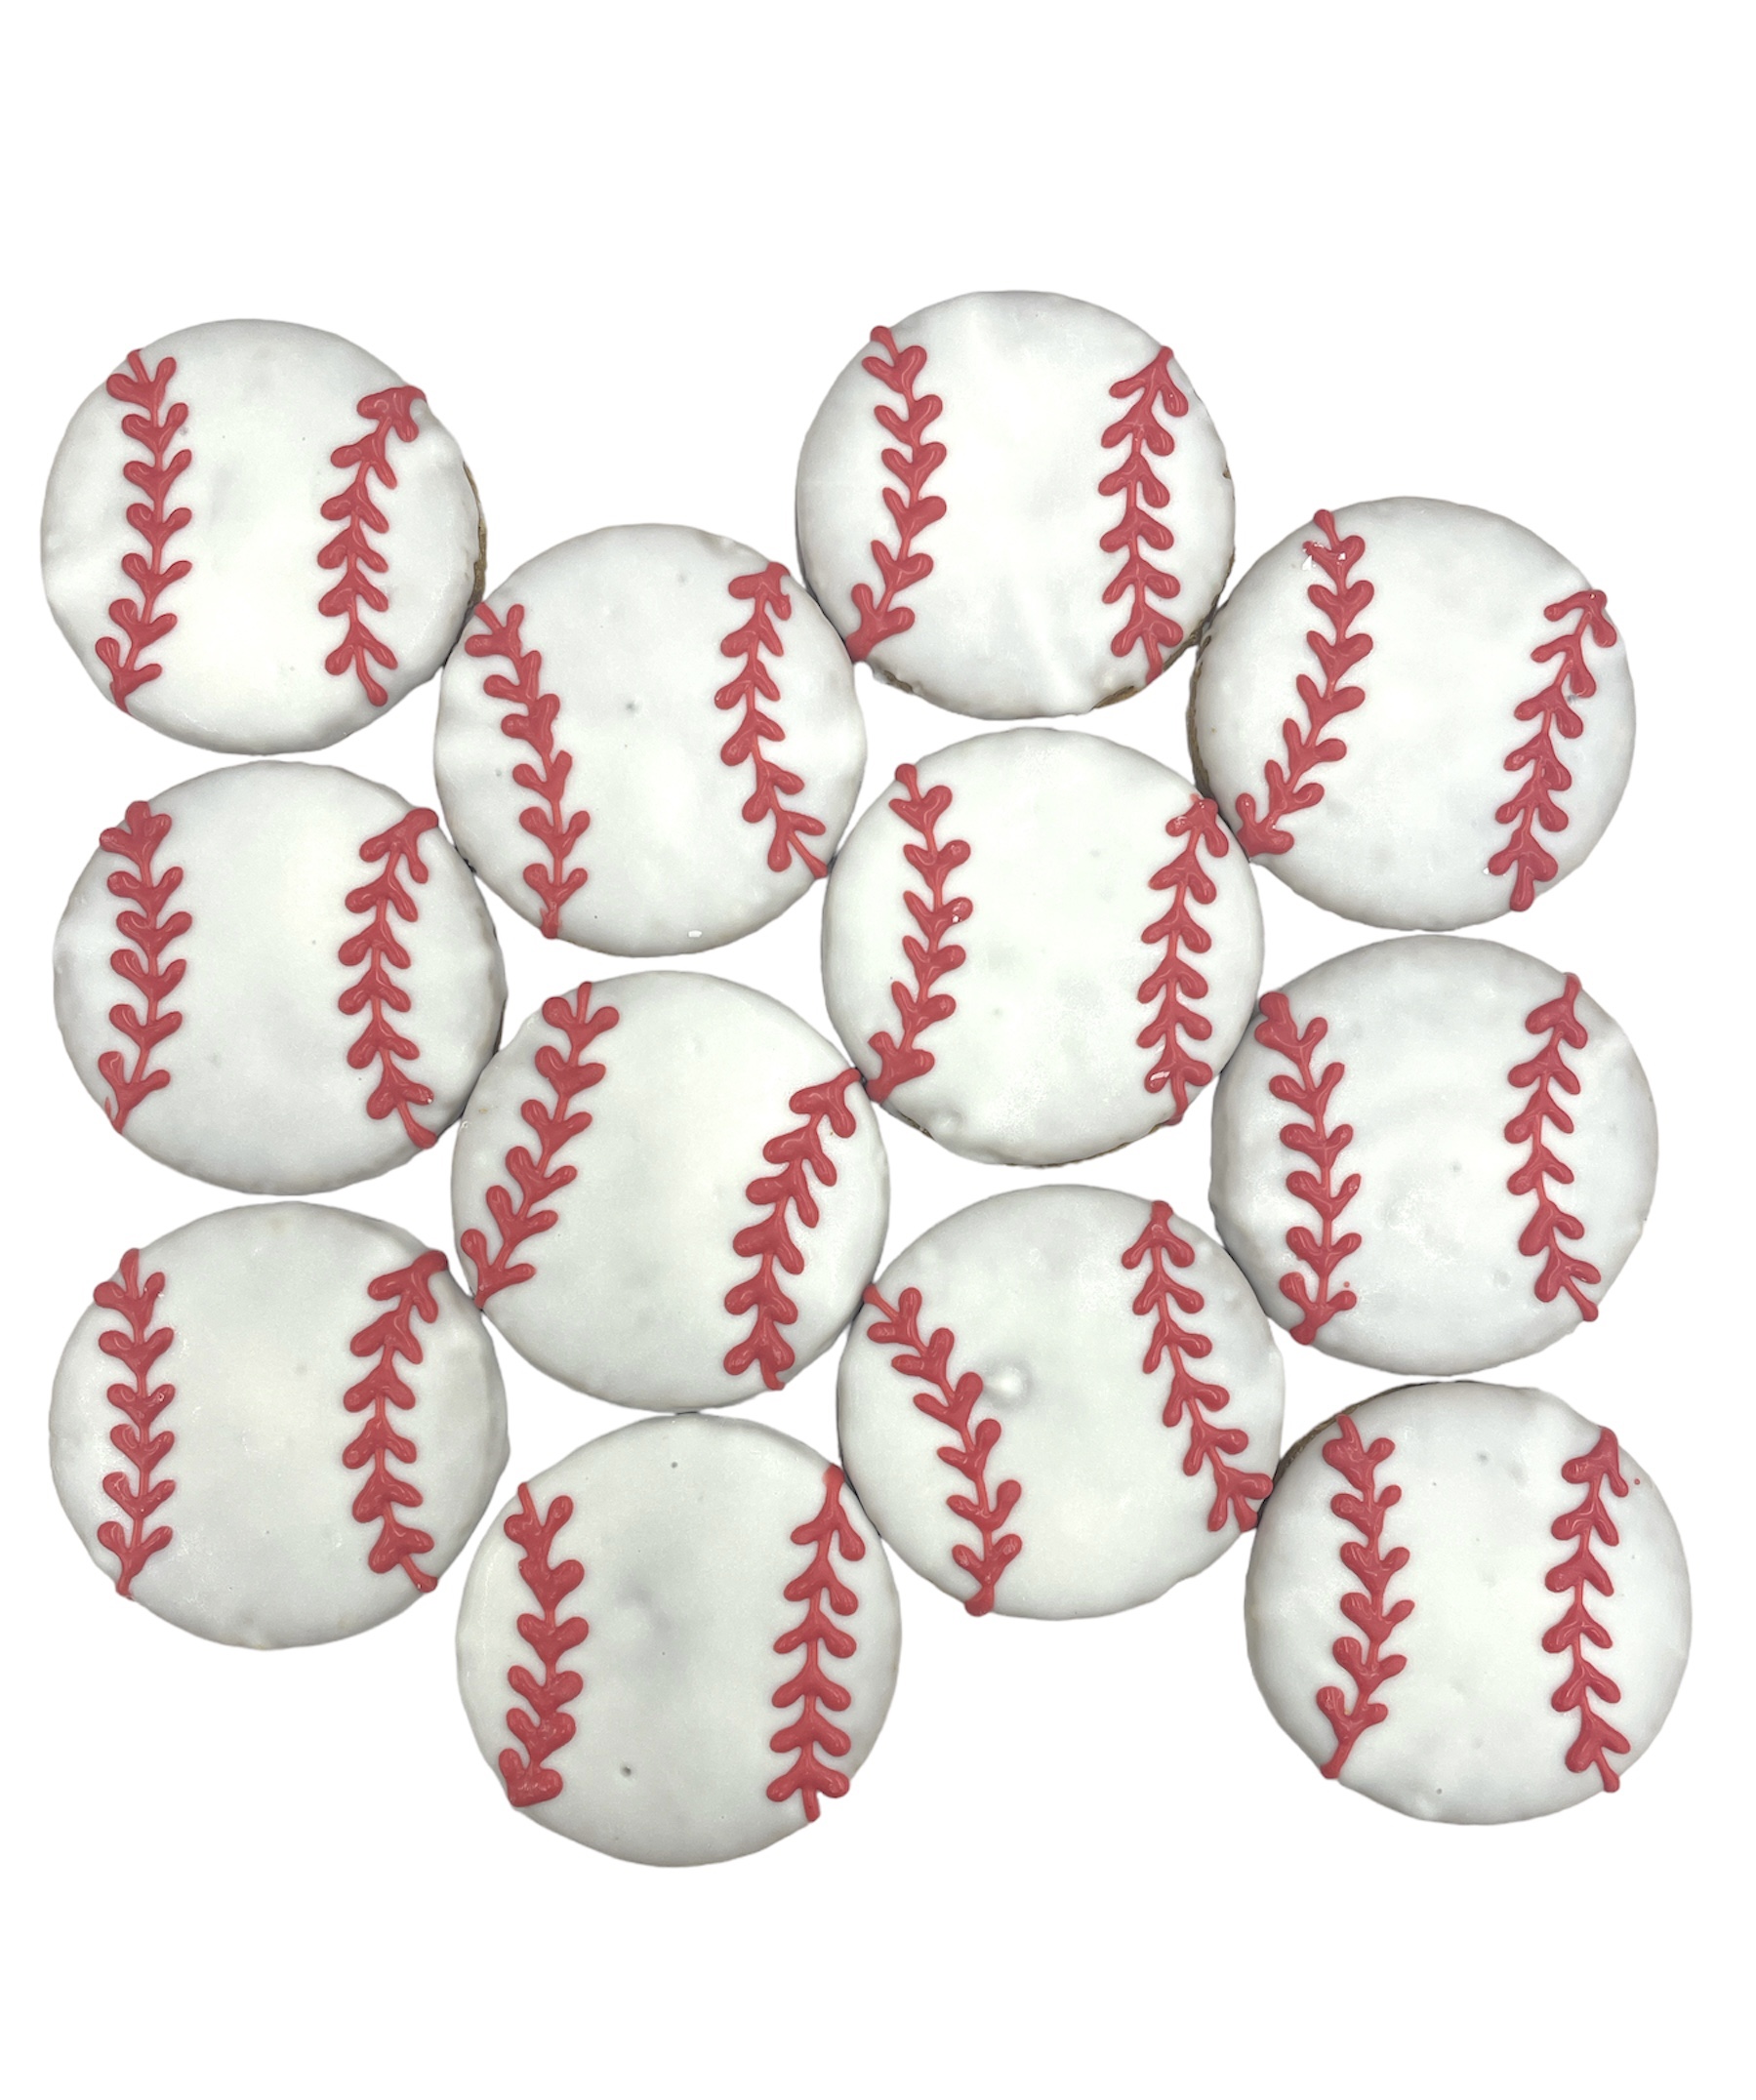 Baseballs - Tray of 12 *